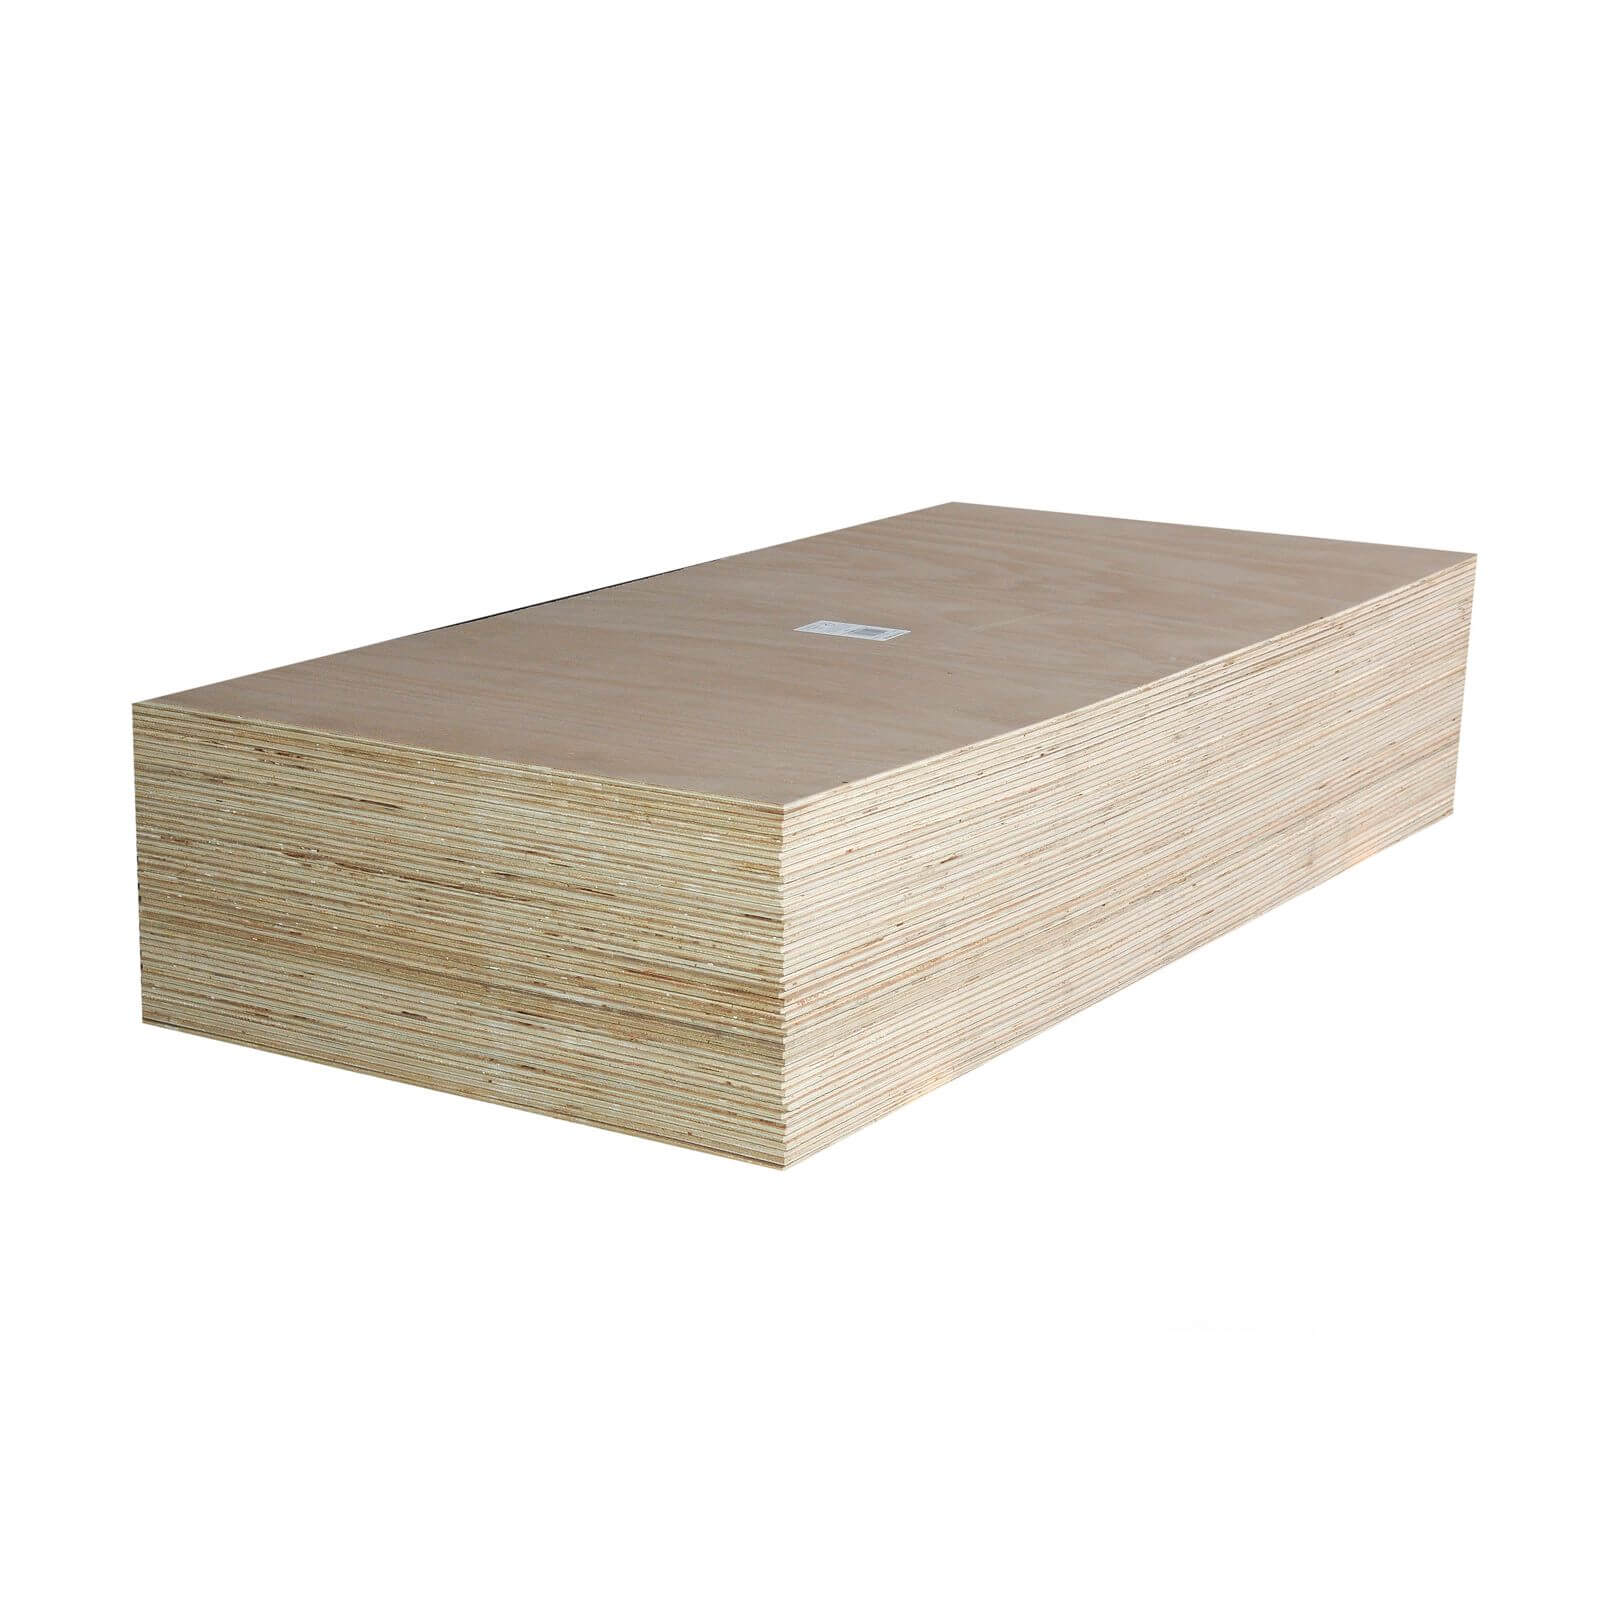 Metsa Hardwood Plywood Board 1.2m (1220 x 607 x 5.5mm)